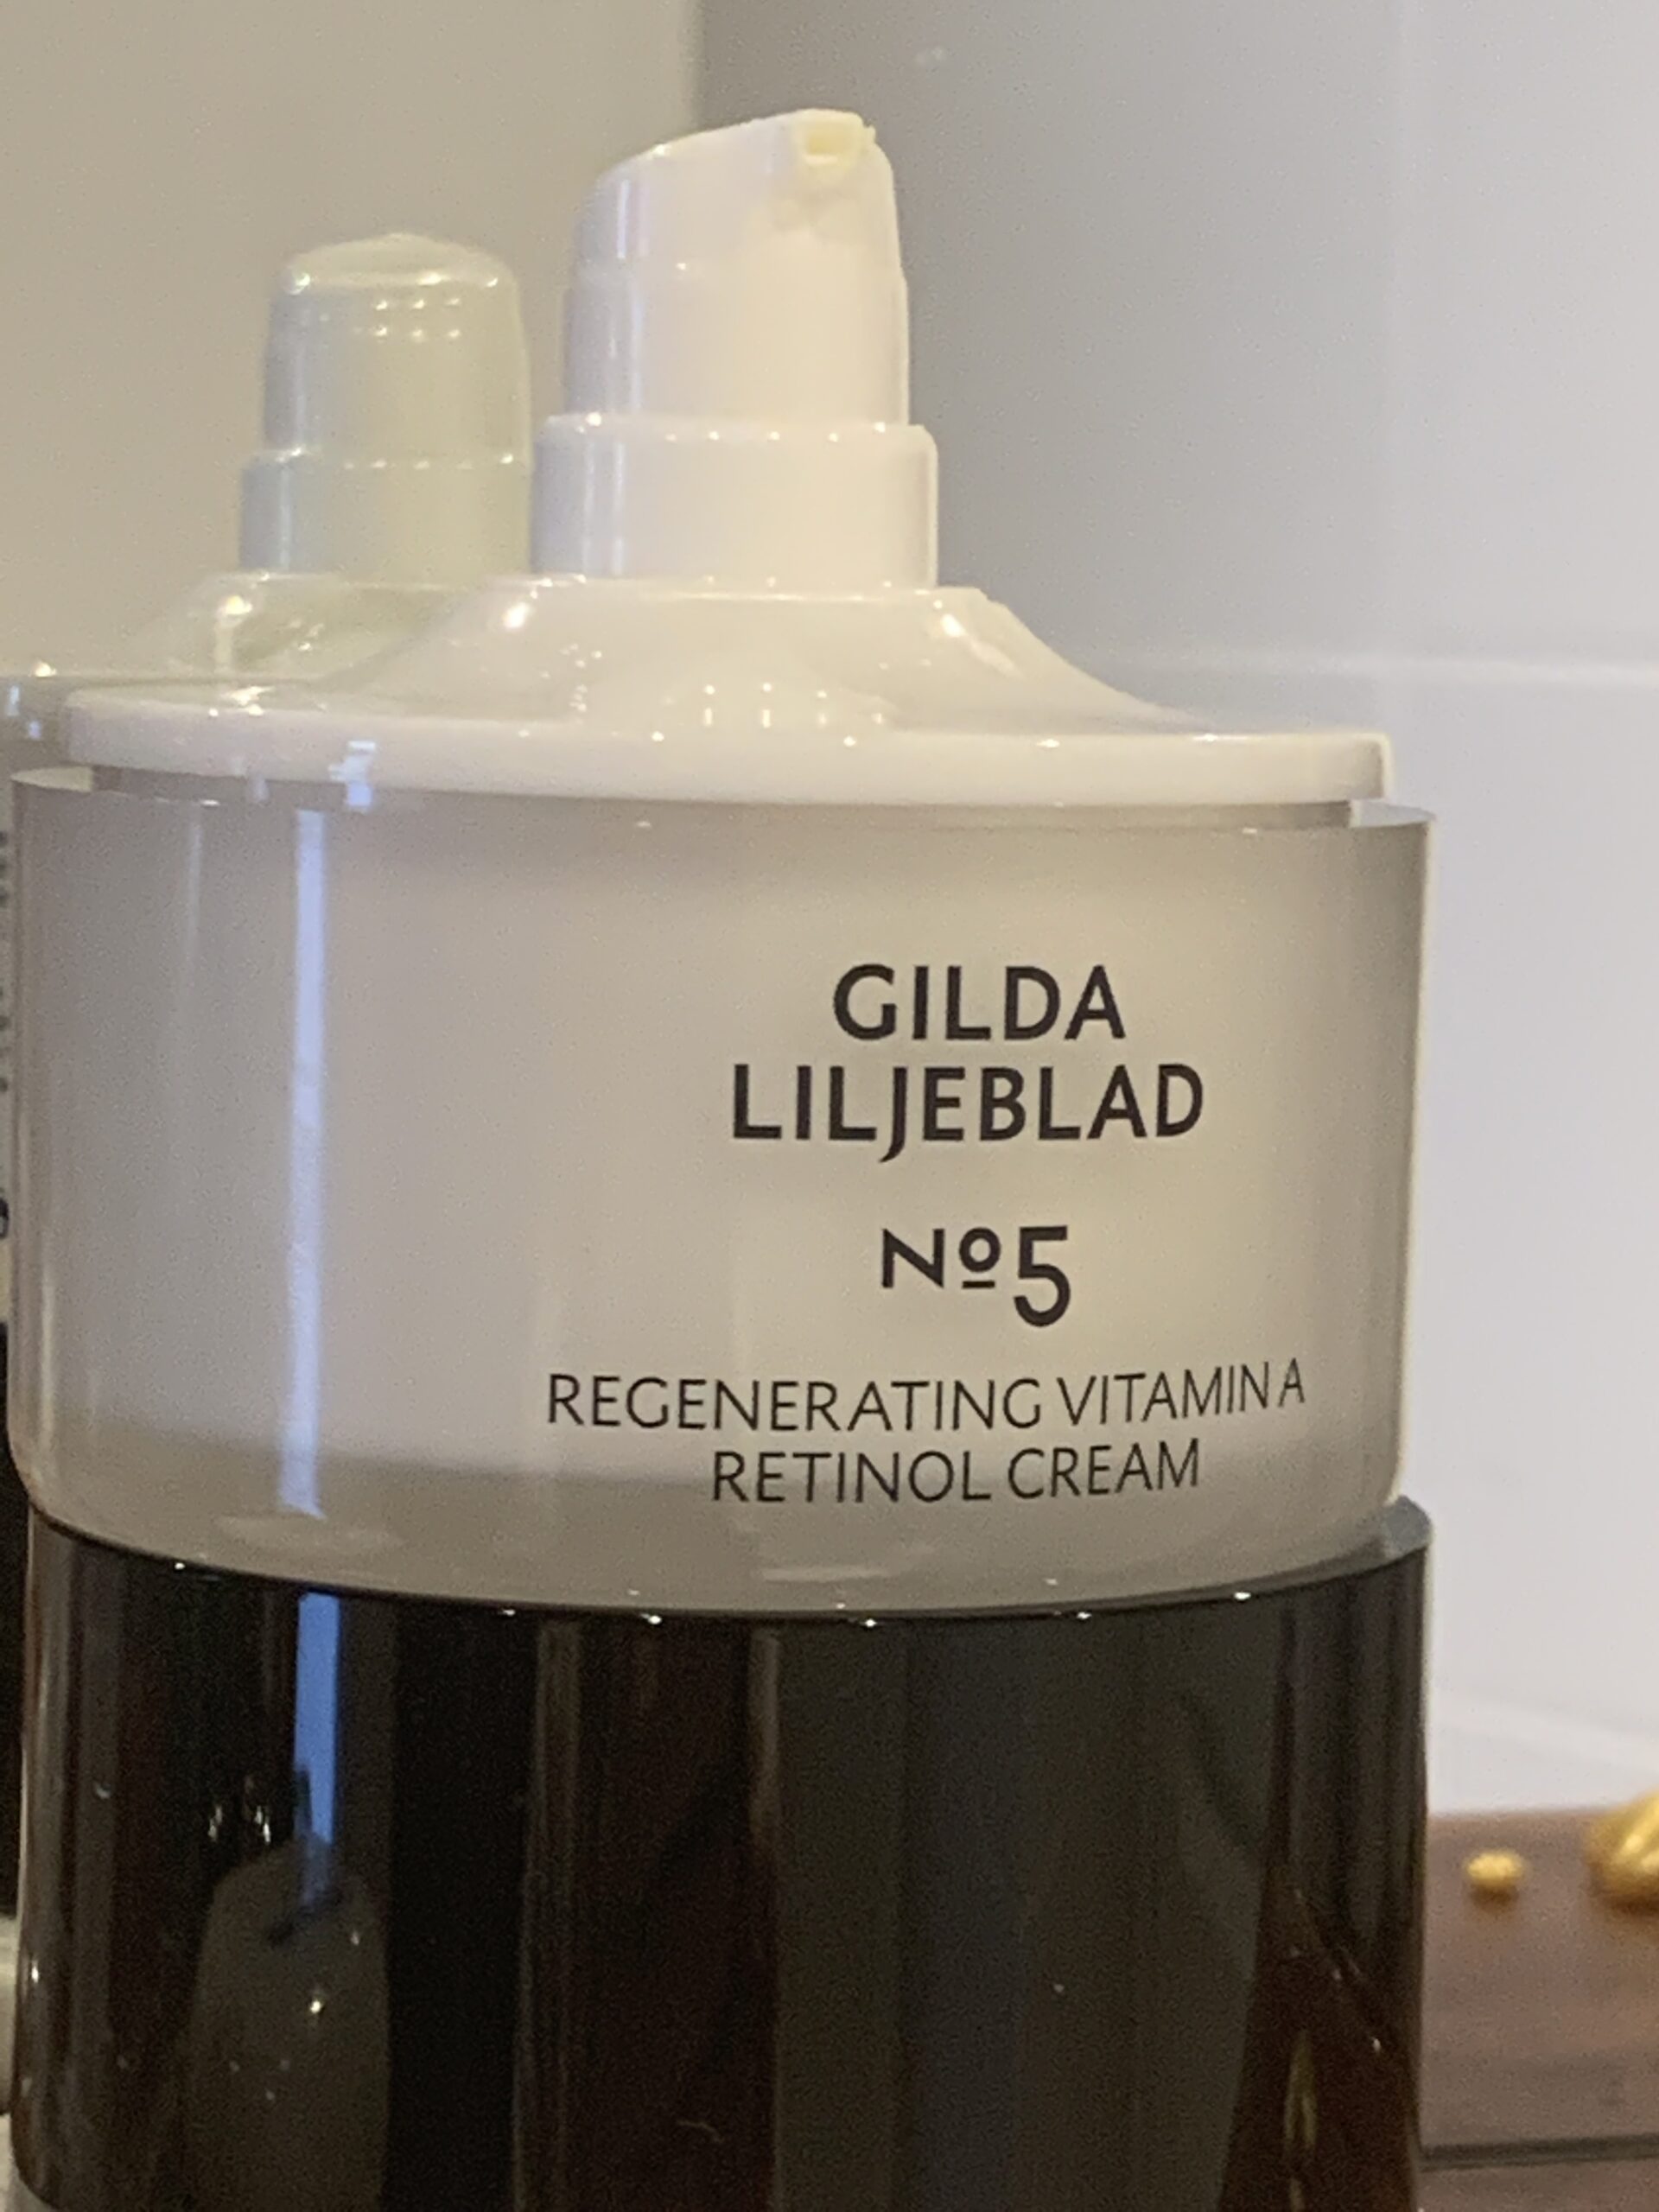 Gilda Liljeblad Regenerating Vitamin A Retinol Cream